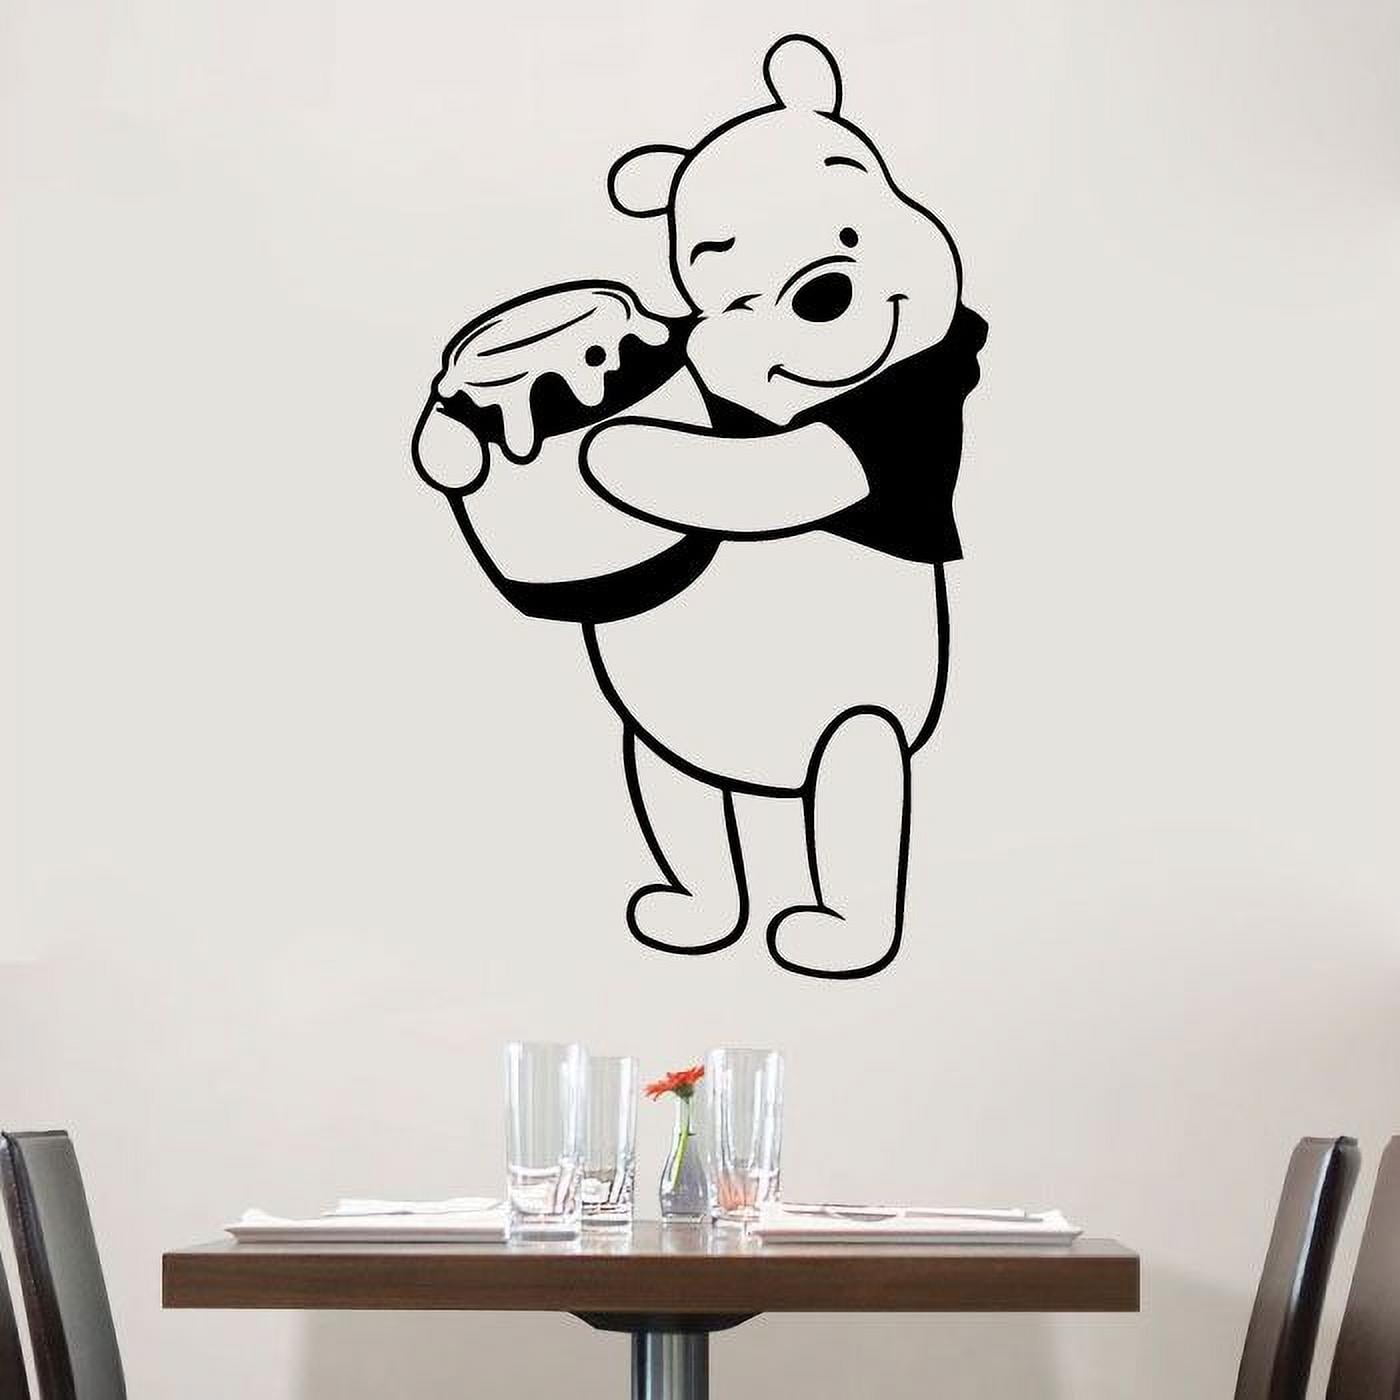 pooh bear nursery wall art sticker decal kids room new baby home decor 3 sizes